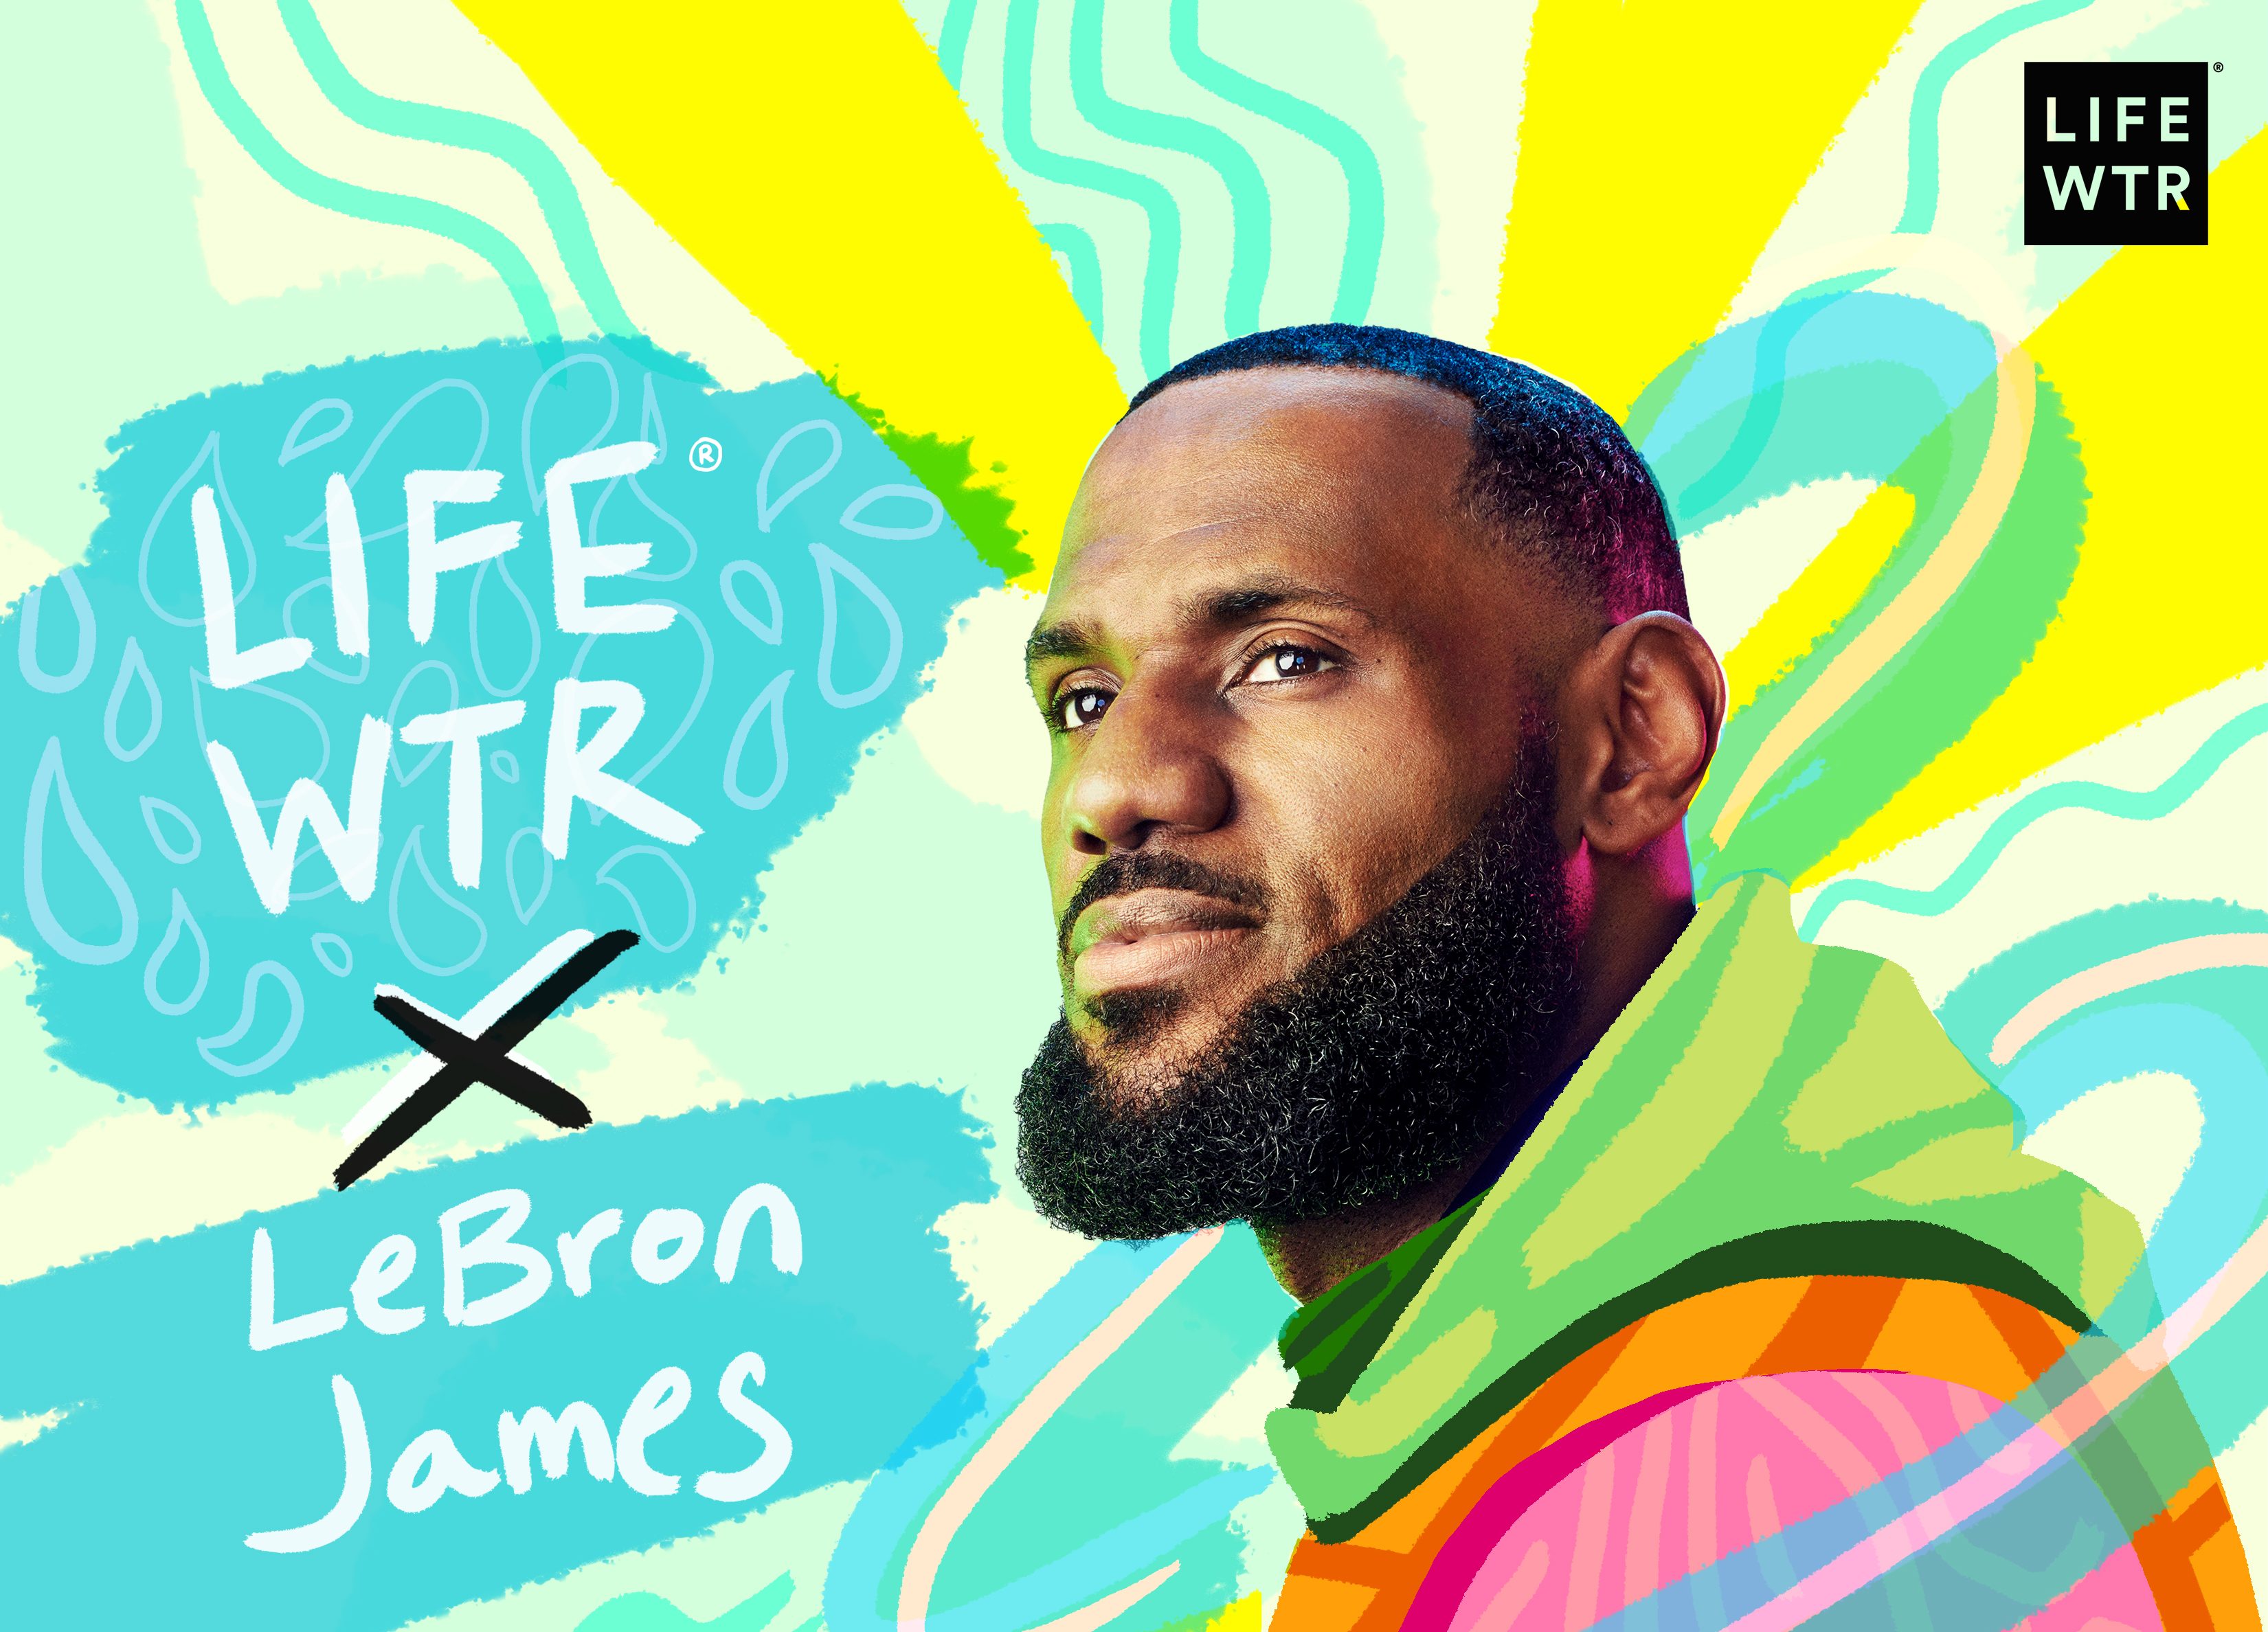 LIFEWTR x LeBron James Announce Multi-Year Partnership